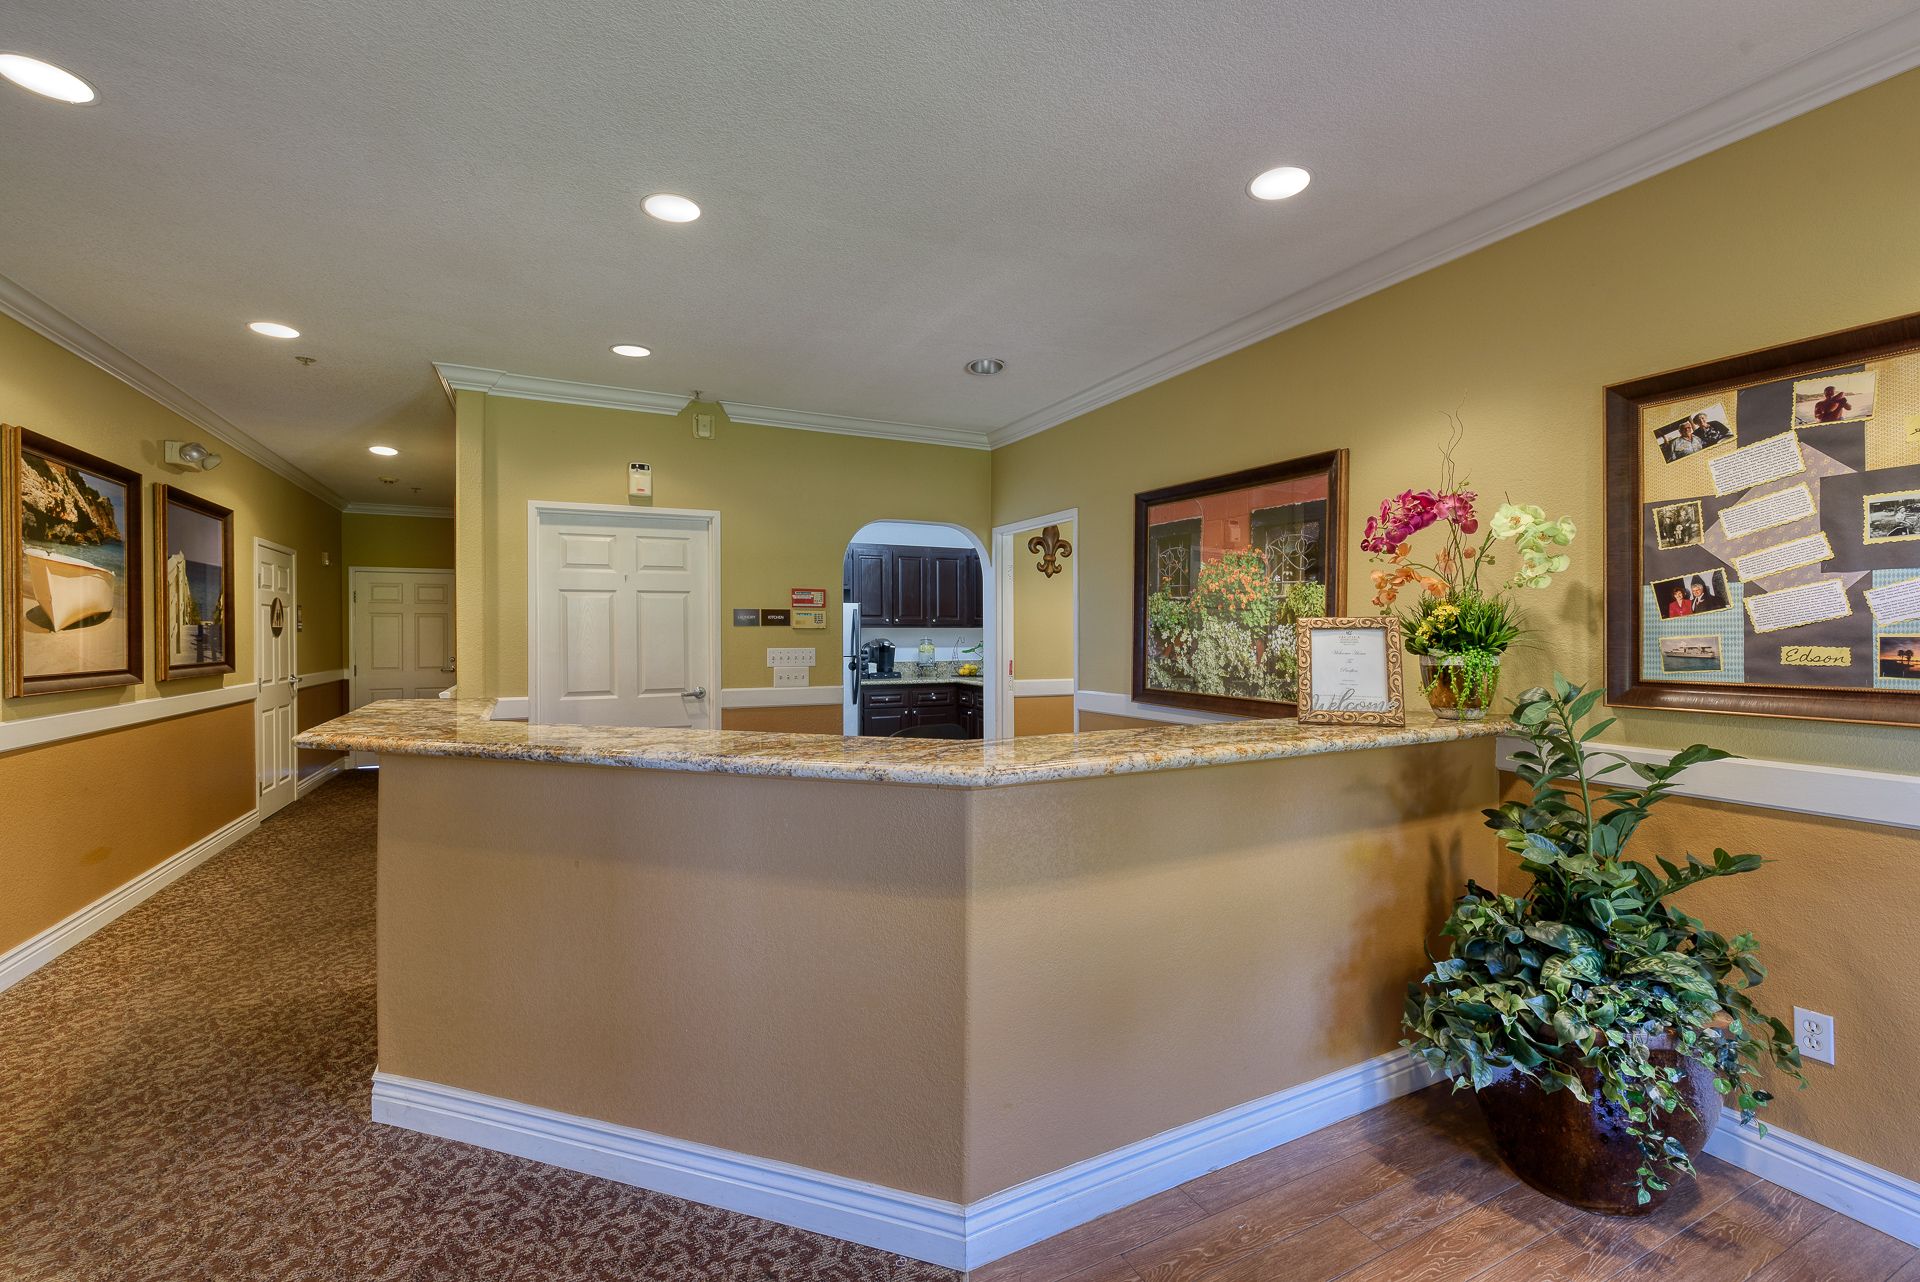 Interior view of Pacifica Senior Living Newport Mesa featuring hardwood floors, furniture, and art.